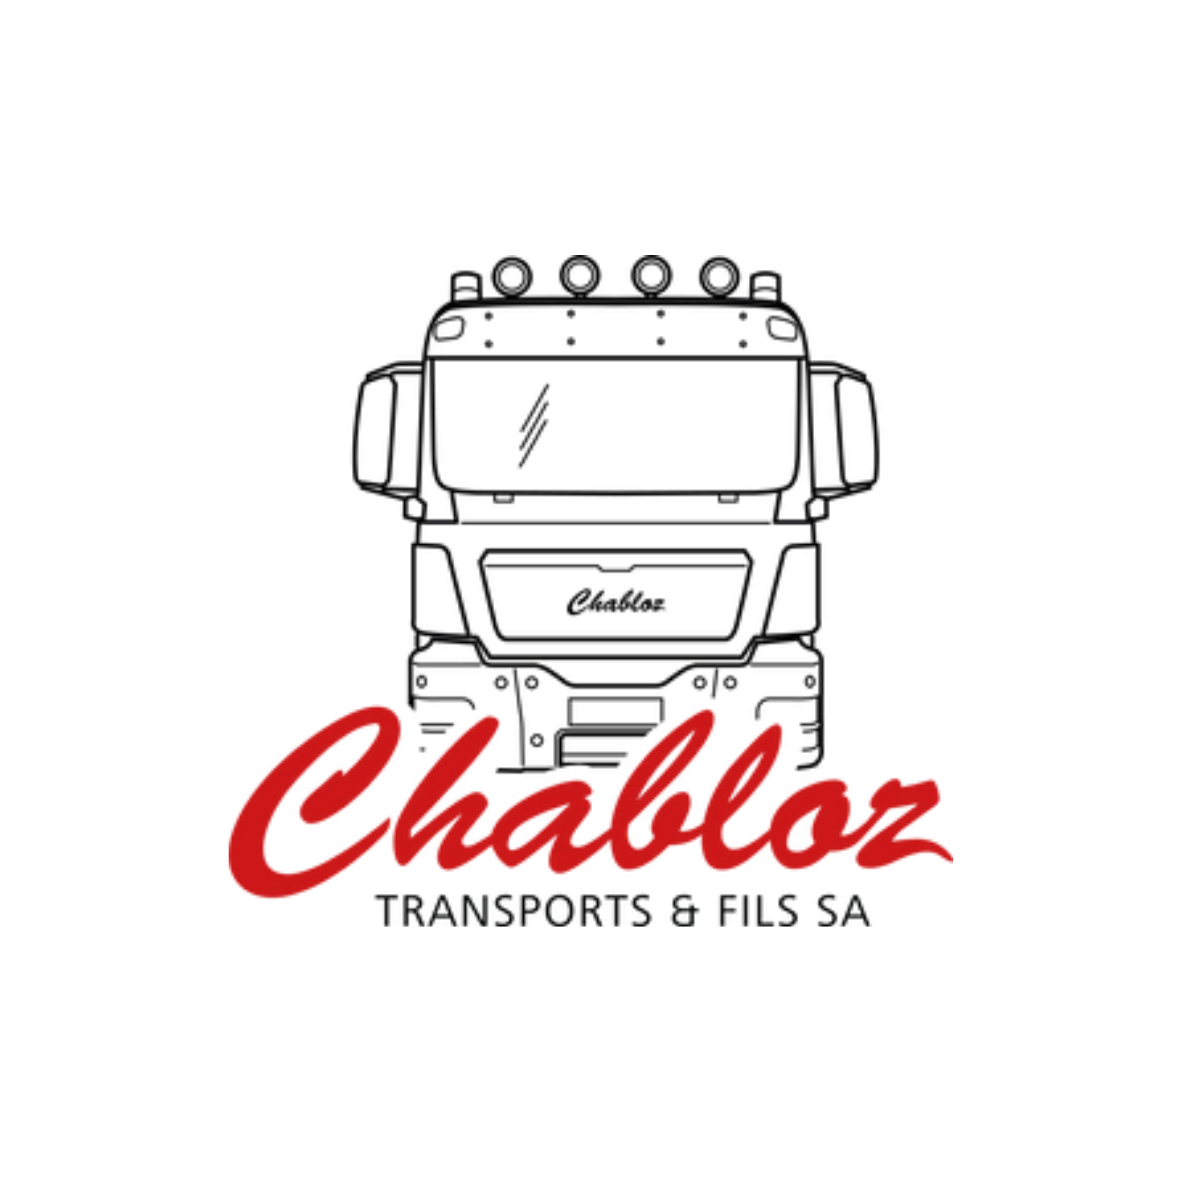 Logo Chabloz transports